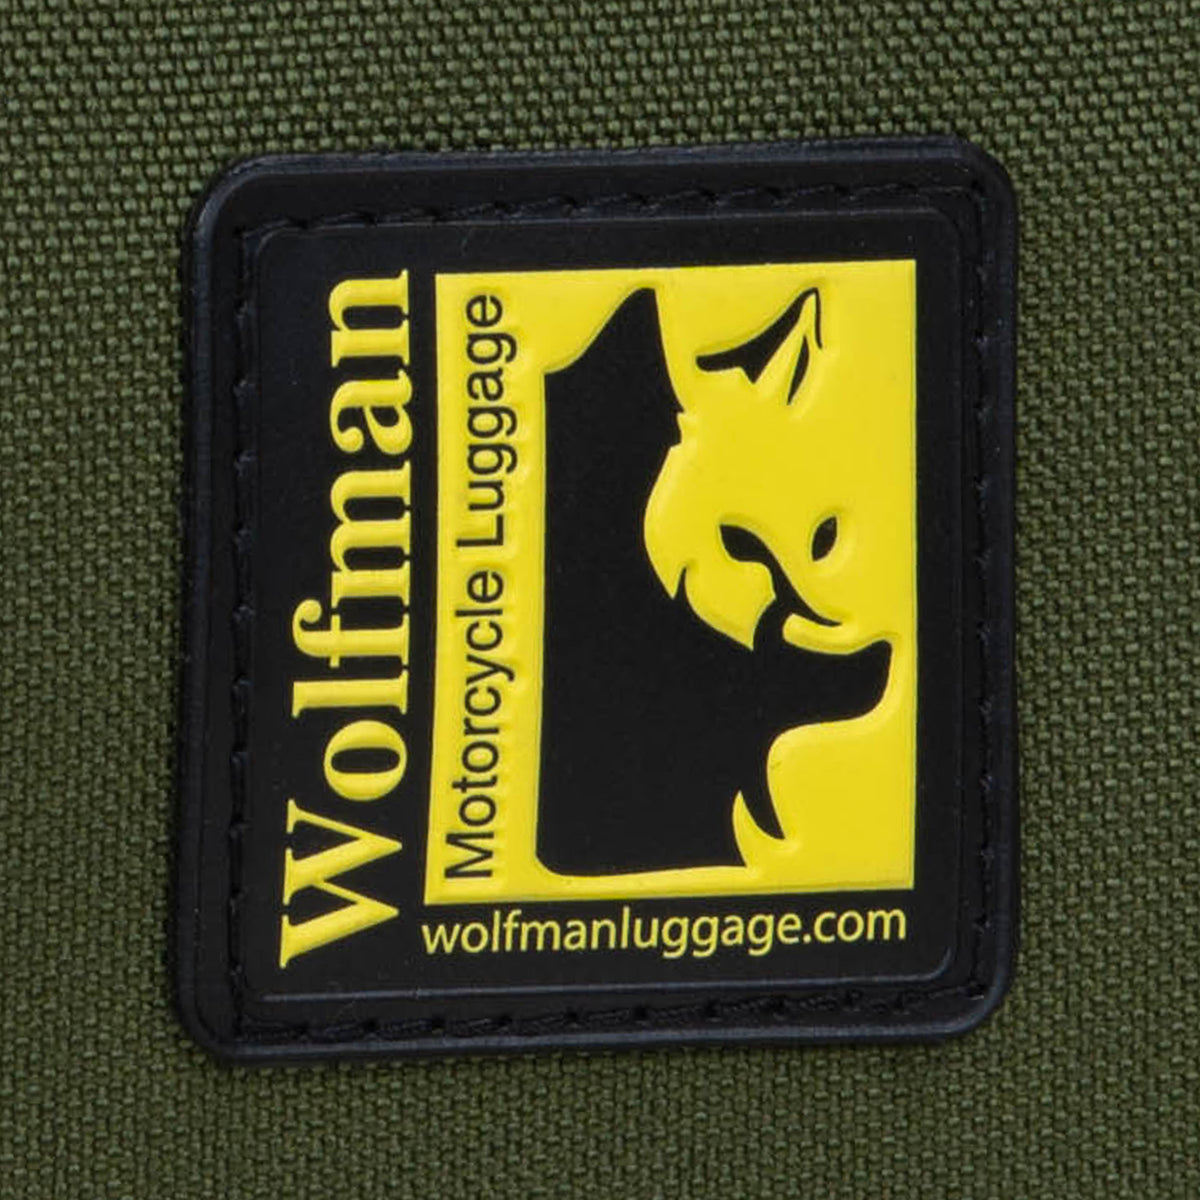 WOLFMAN LUGGAGE - CUSTOM TOTE BAGS